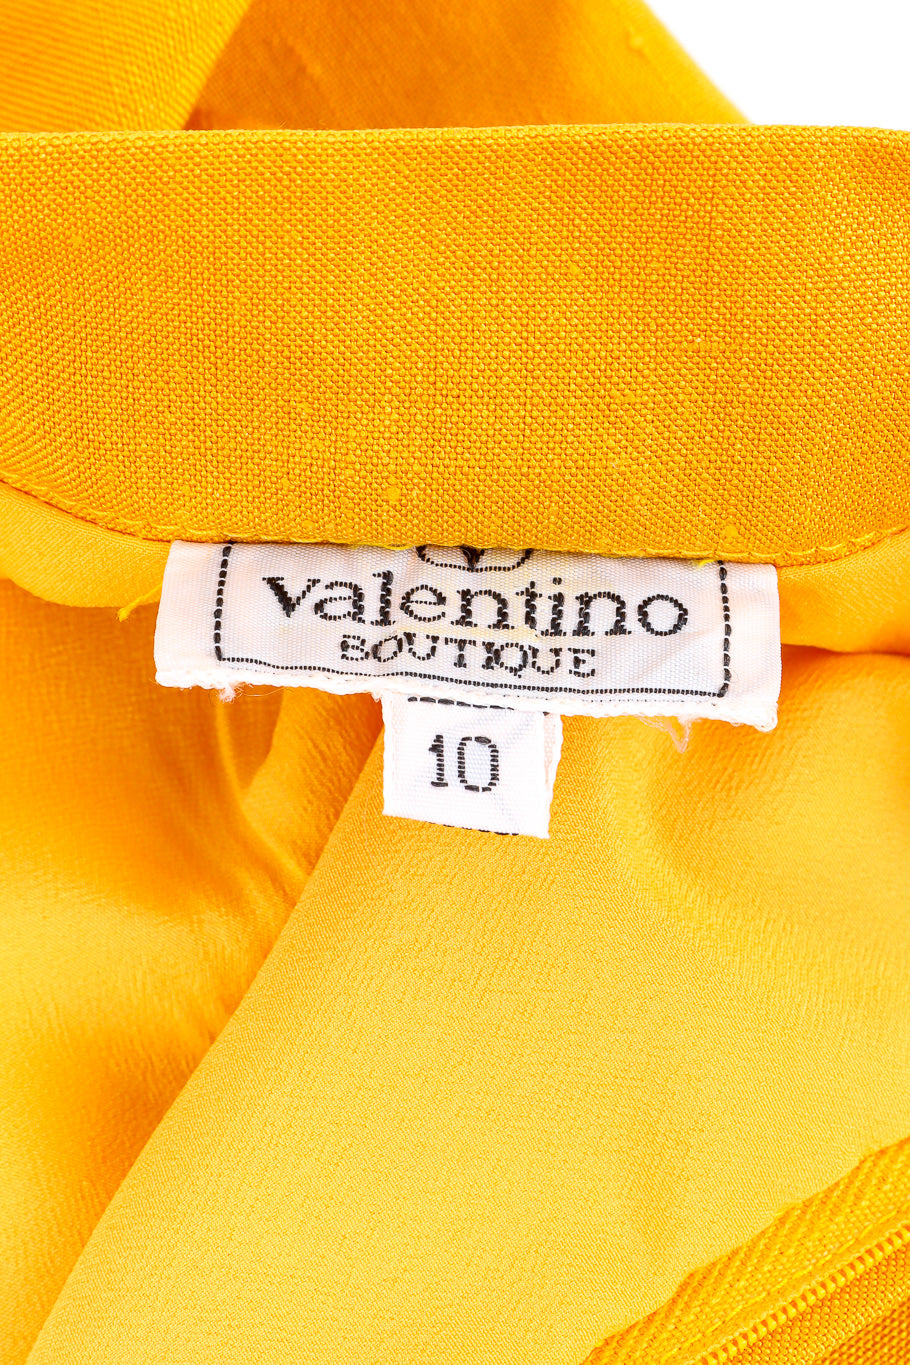 Valentino Boutique shell pattern jacket and skirt set designer label @recessla